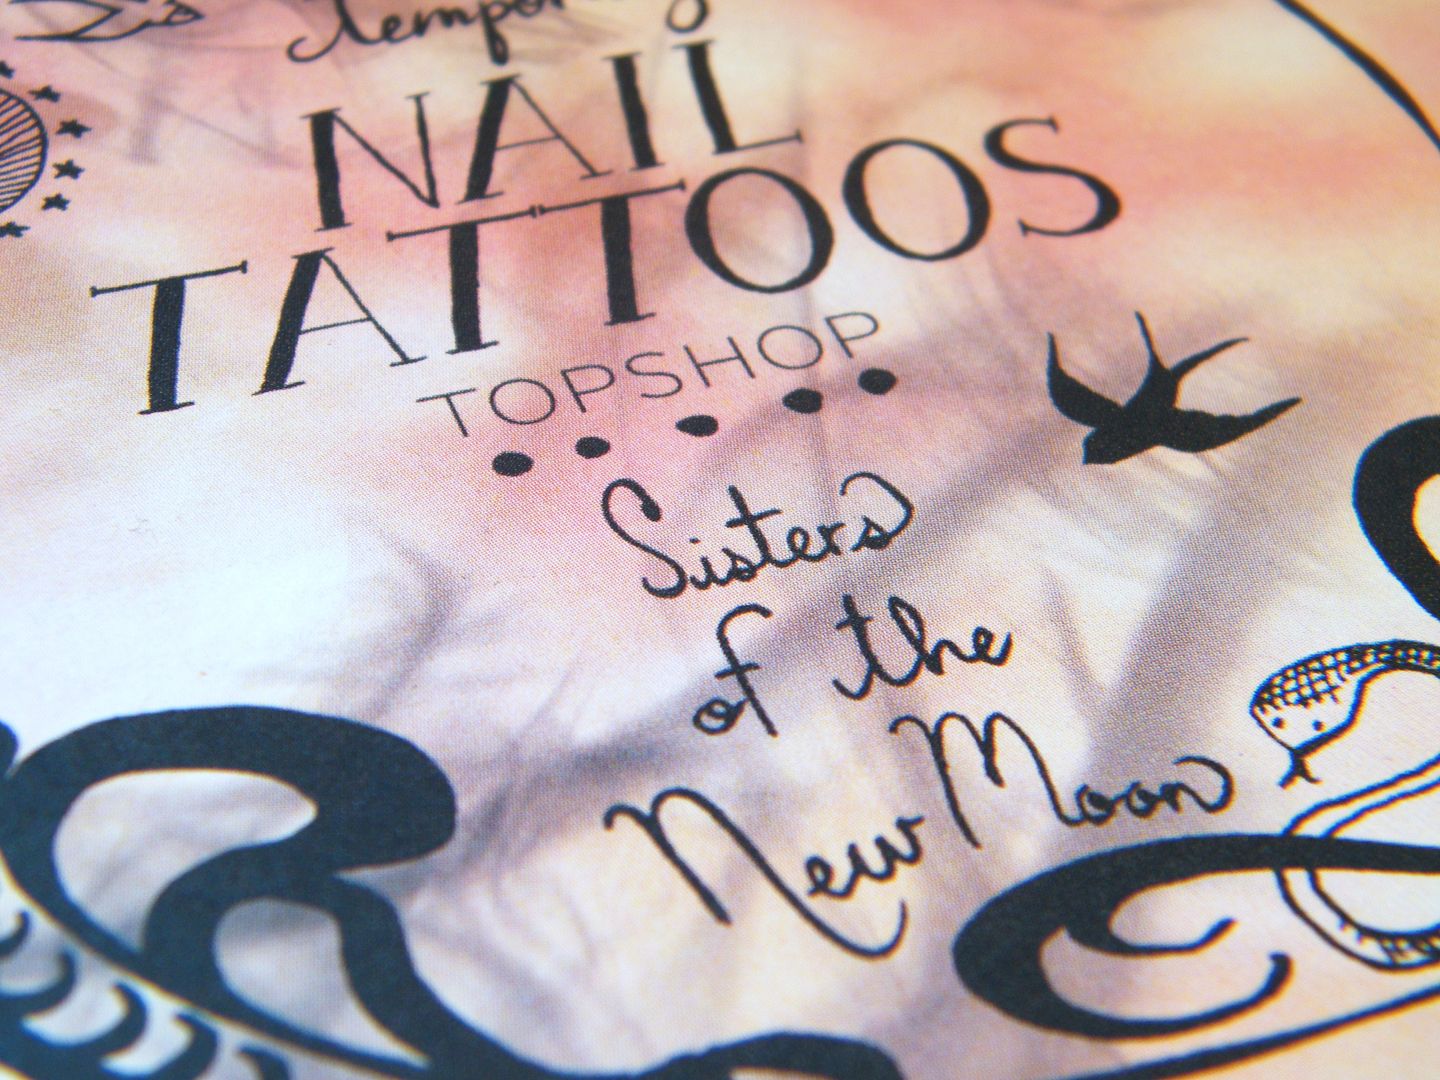 Topshop Sisters Of The New Moon Temporary Nail Tattoos